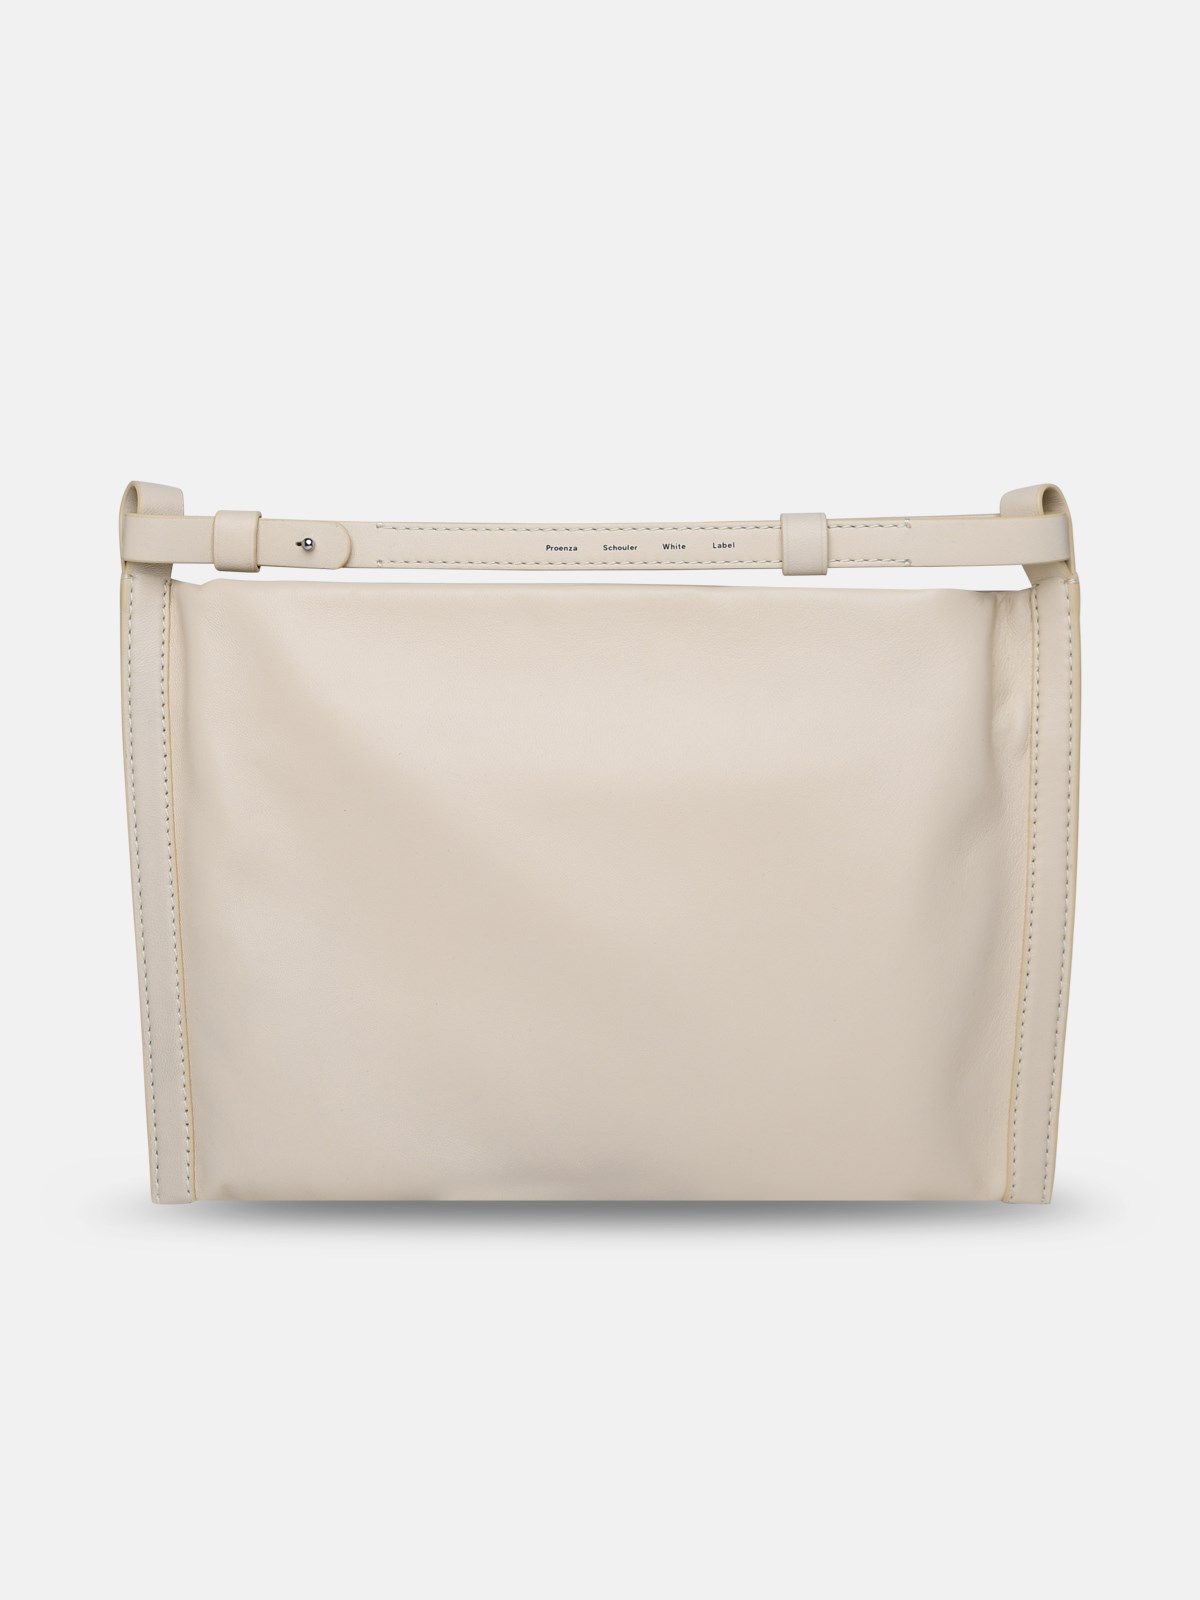 Proenza Schouler White Label Ivory Leather Minetta Bag